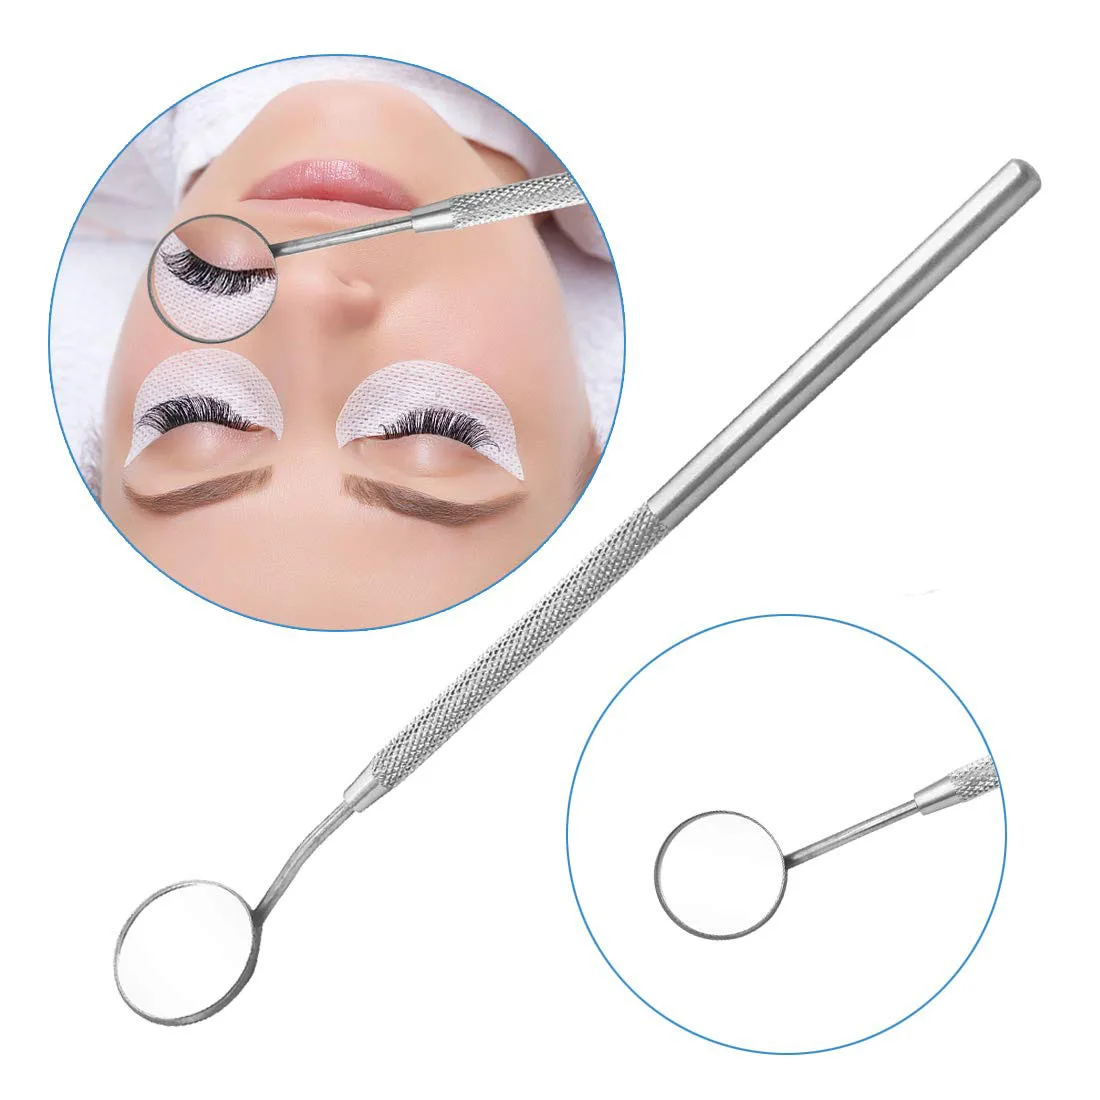 Magnifying Checking Eyelash Extension Applying Teeth Cleaning Tools Mirror Stainless Steel Handle Eyelashes Makeup Tool